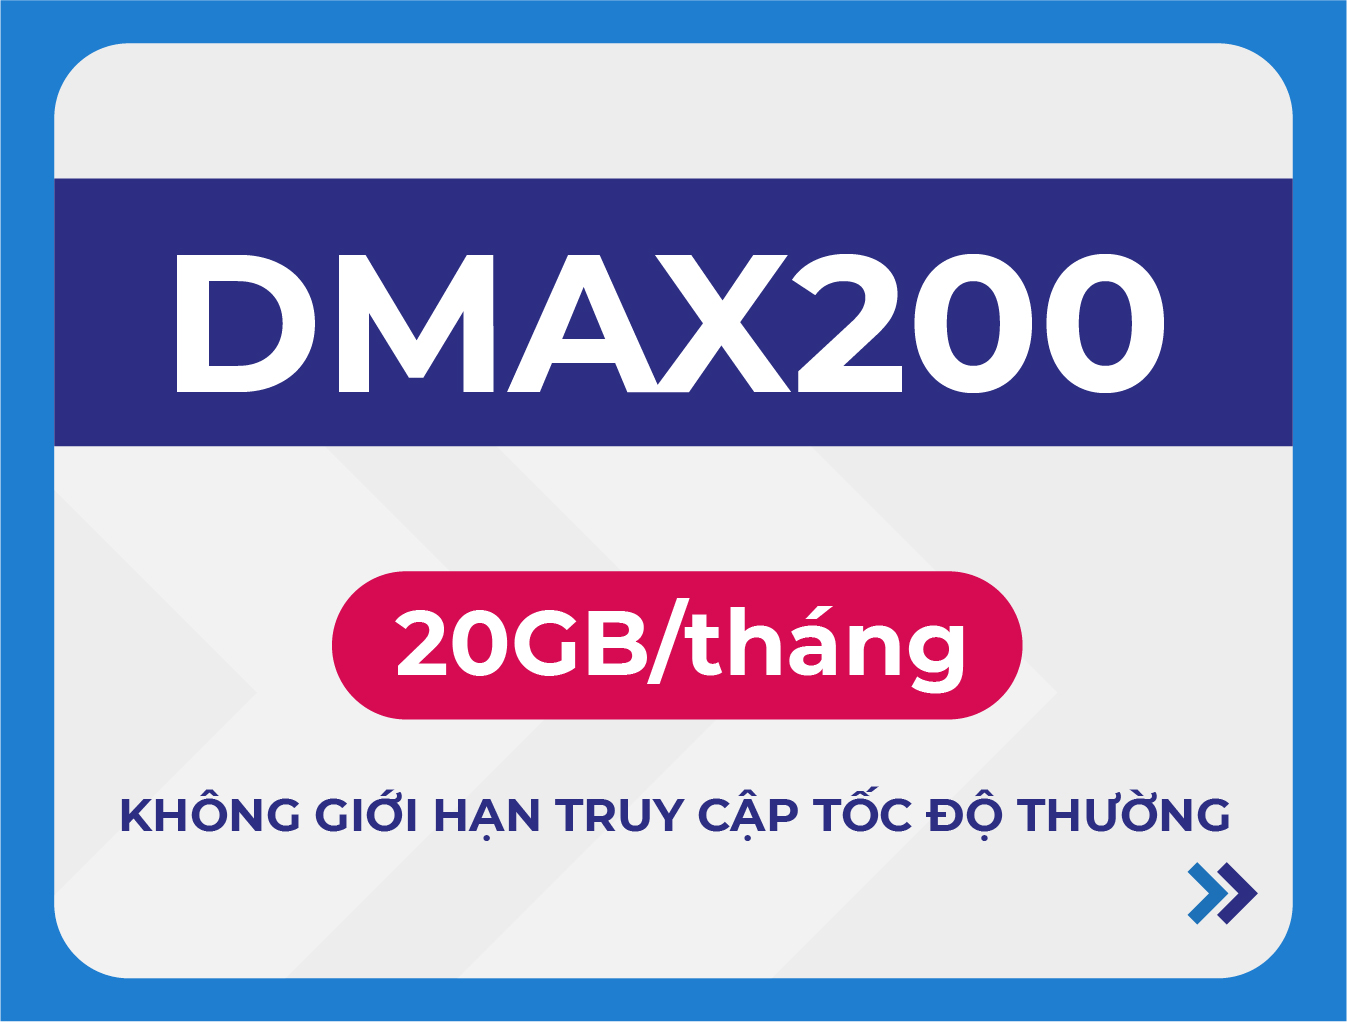 DMAX200